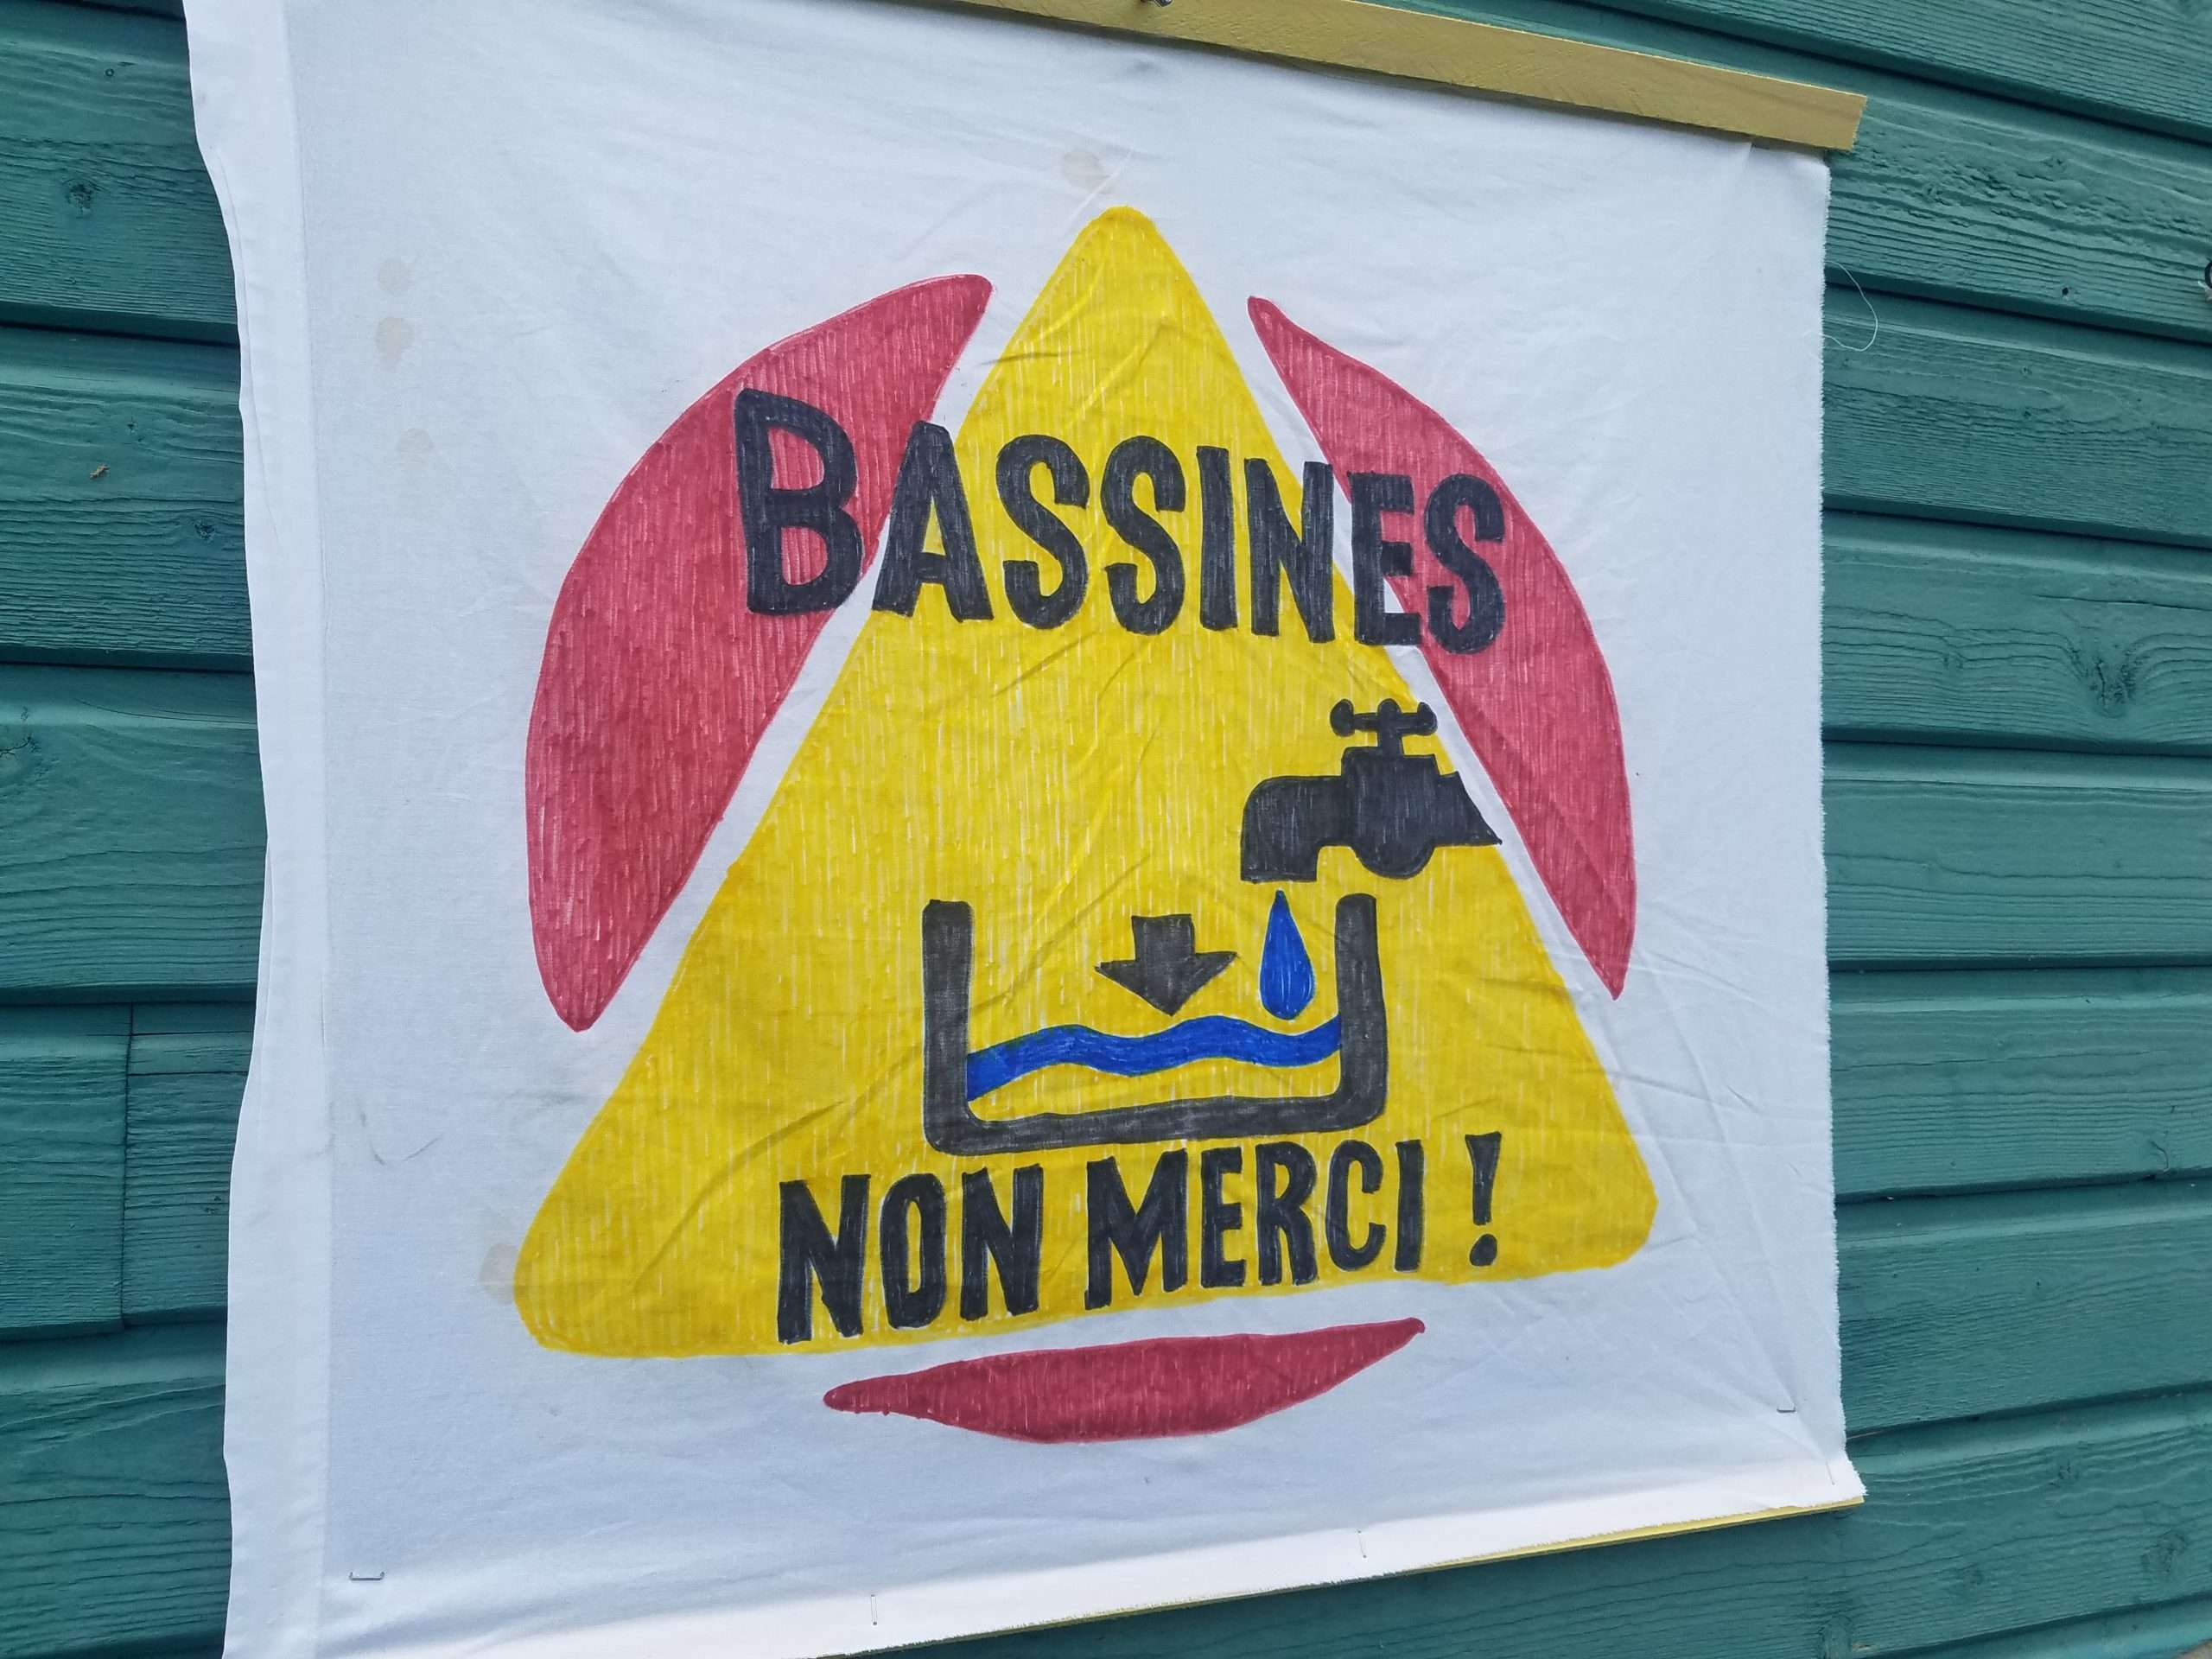 Bassines Non merci